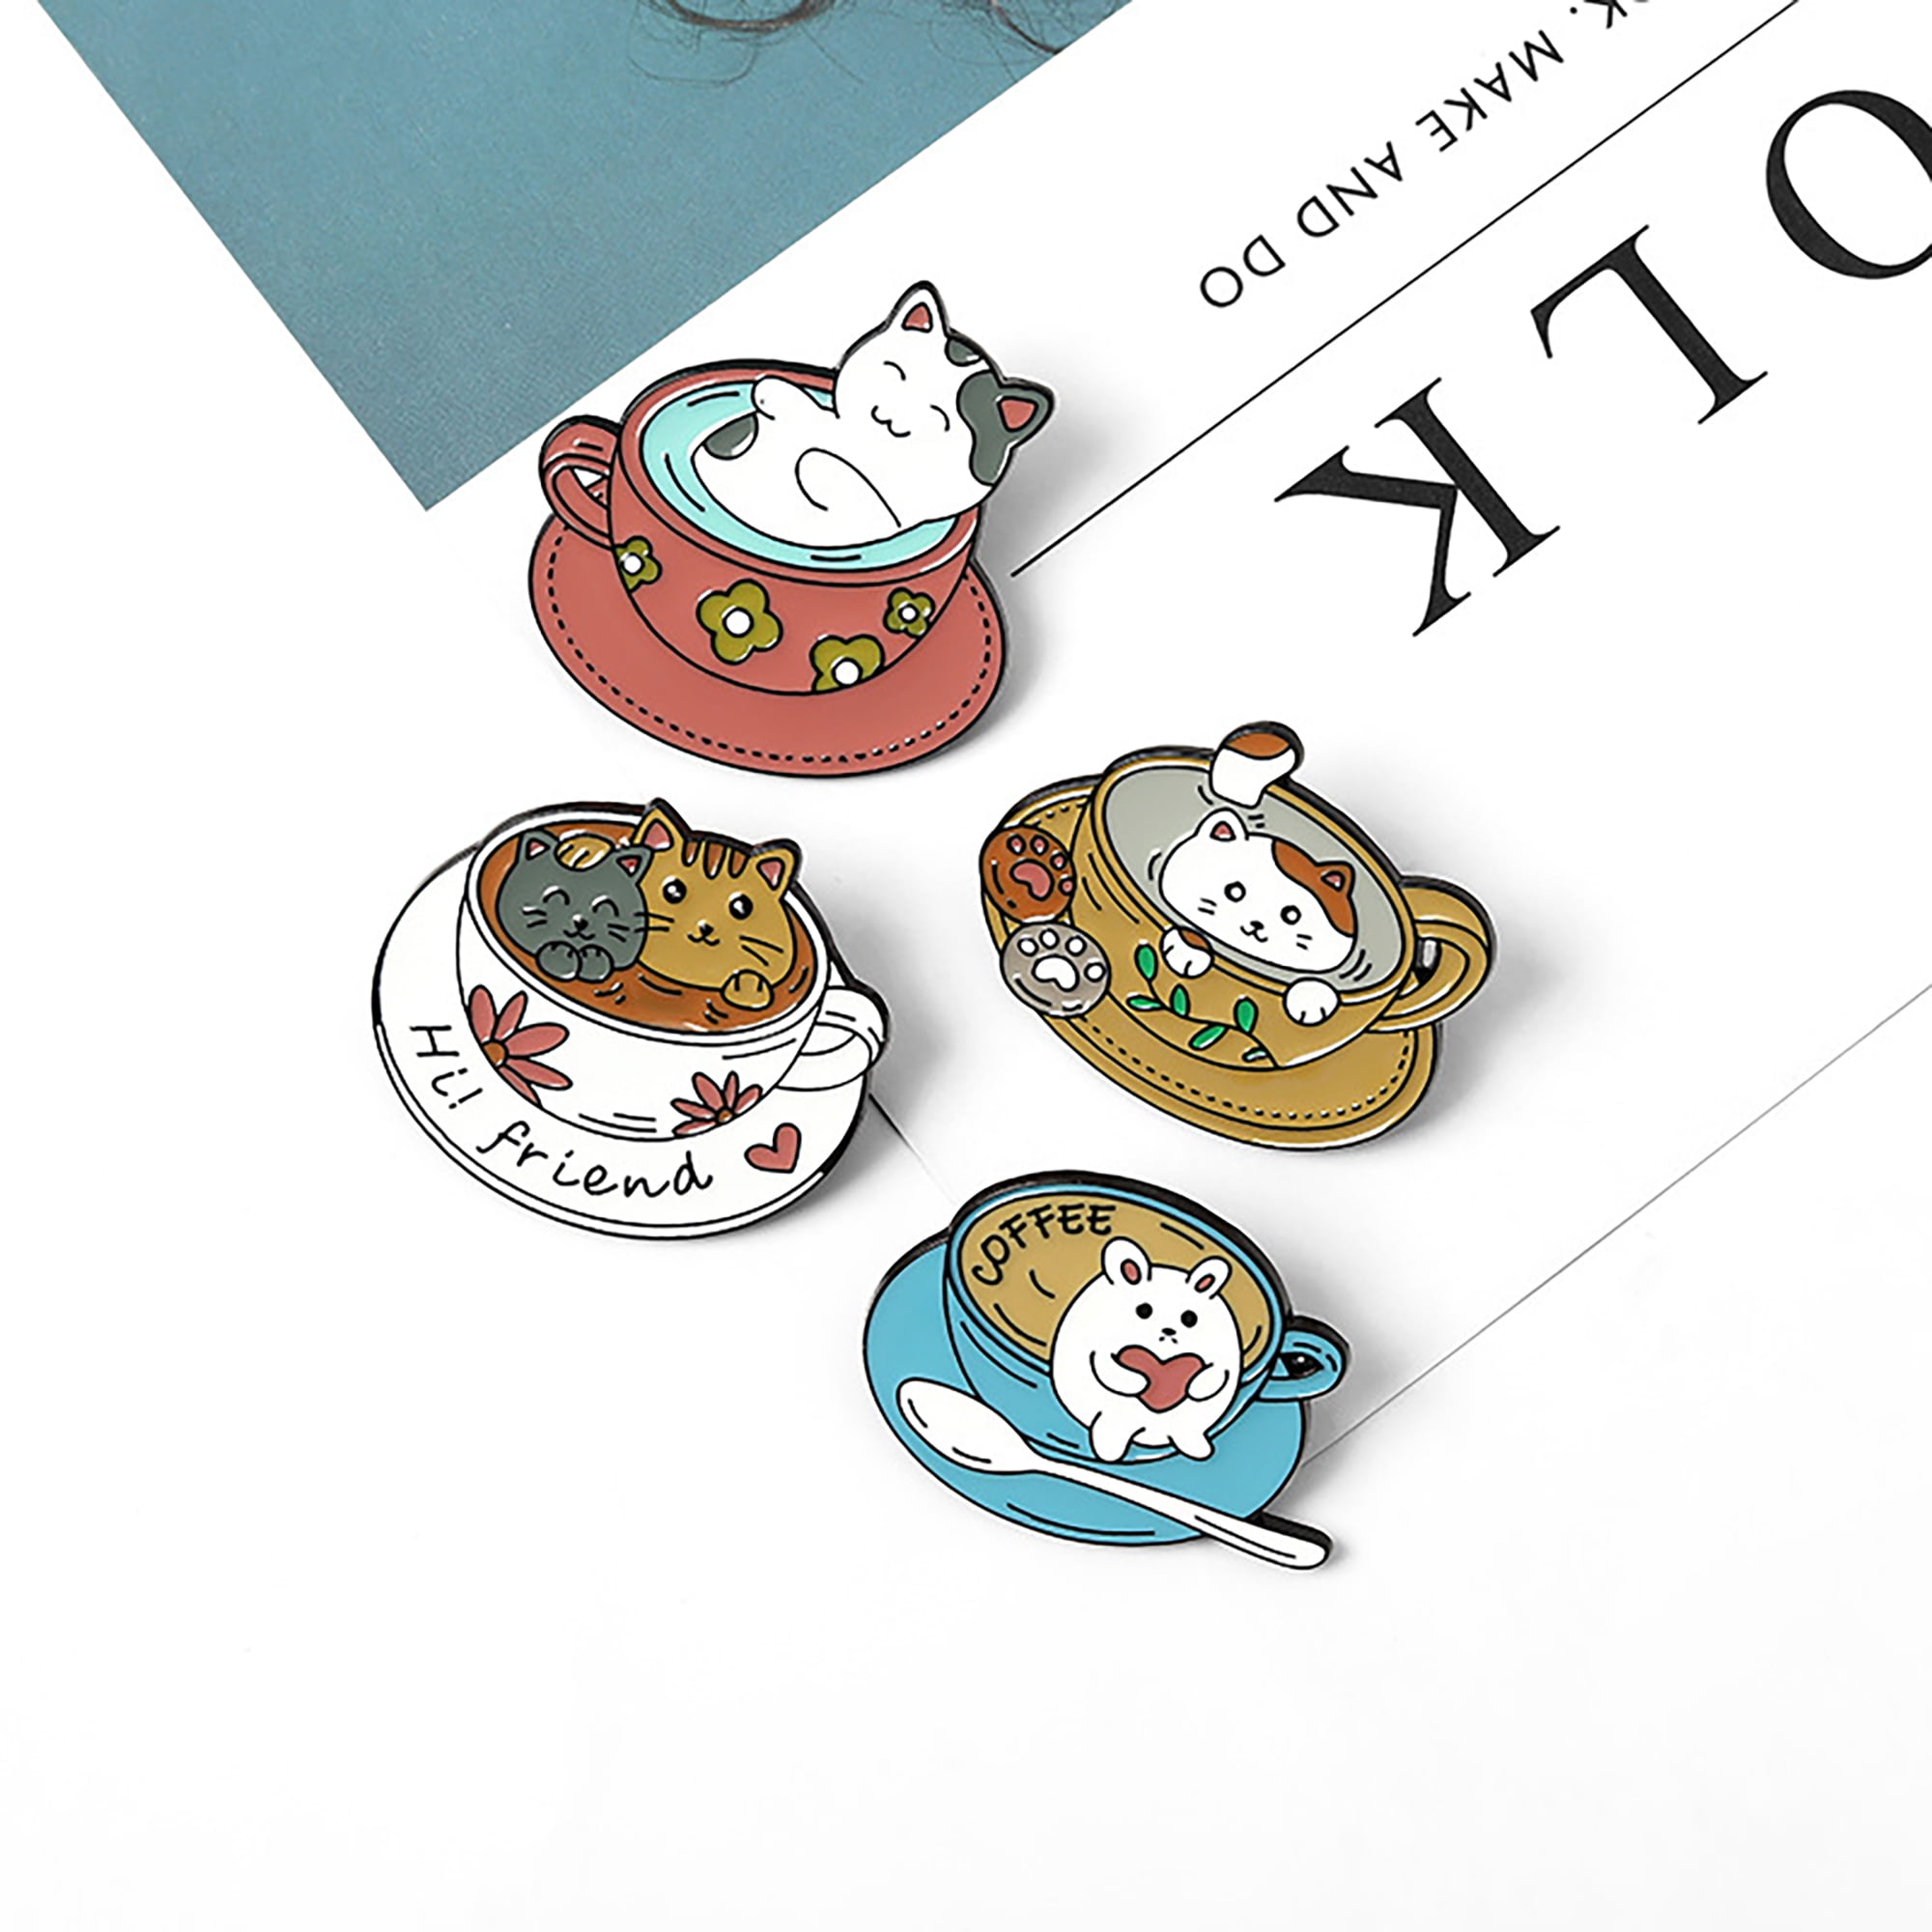 Pair of snuggle cat pins - Shop chiuflowers Badges & Pins - Pinkoi